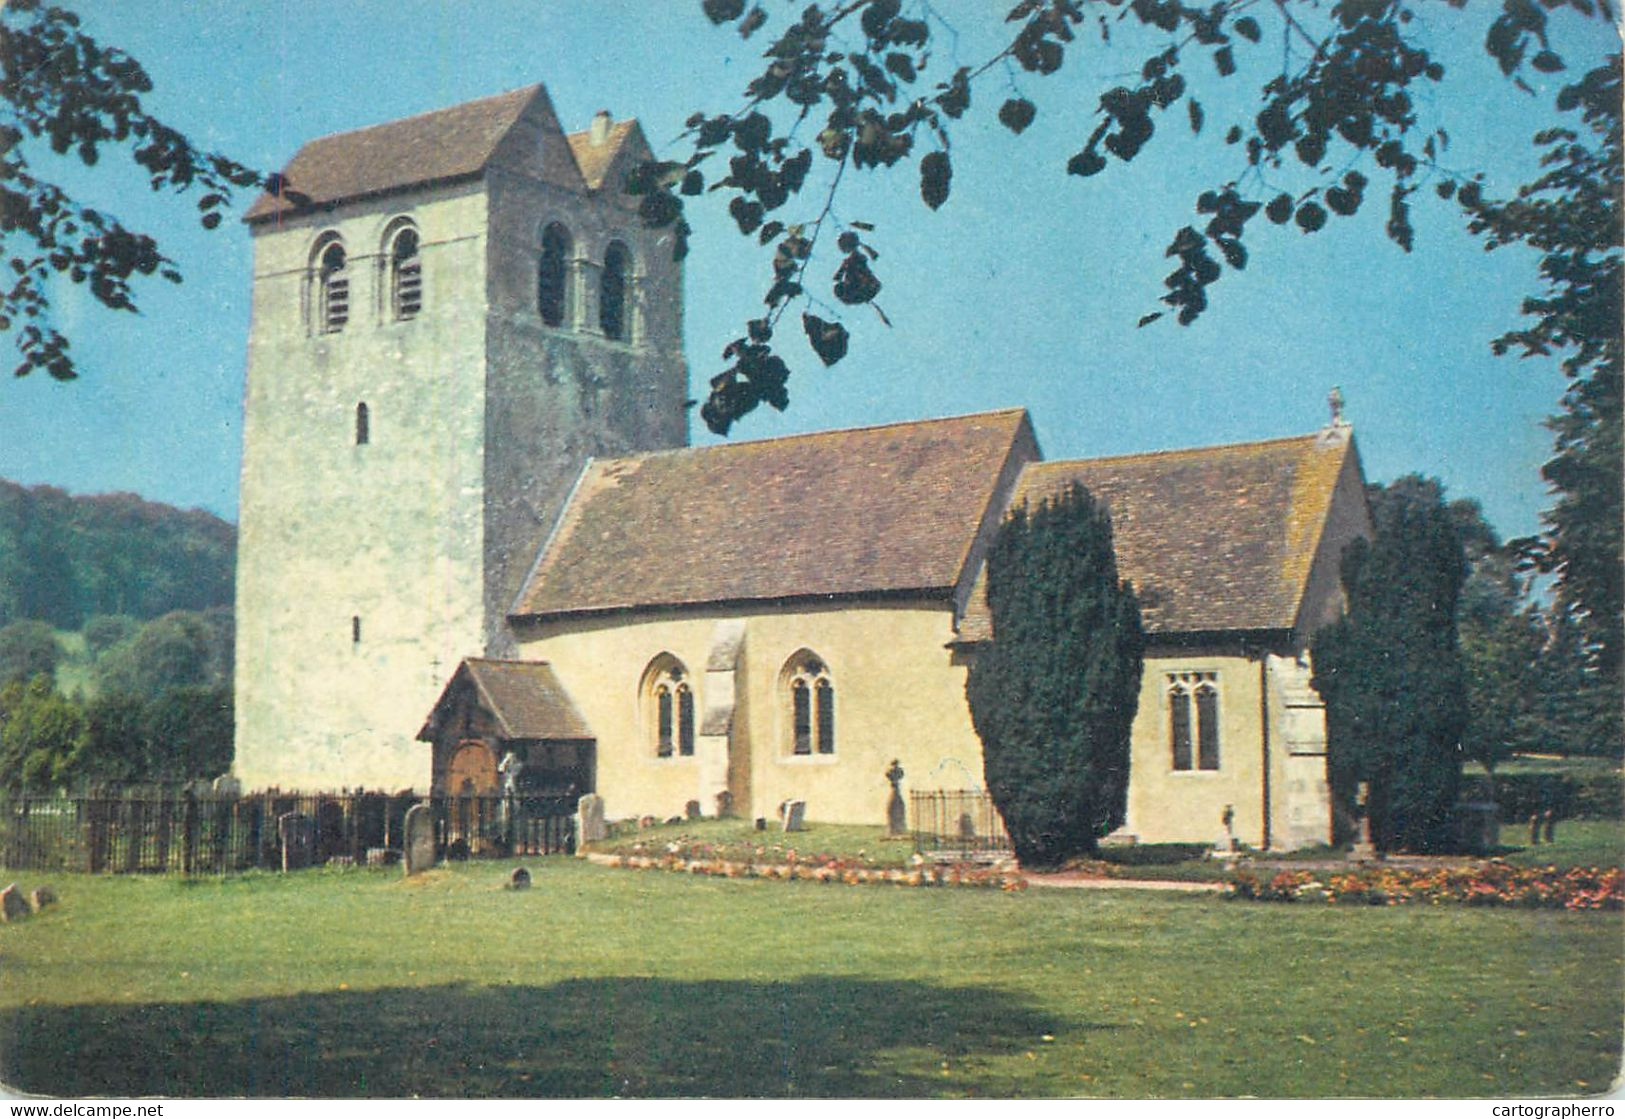 Postcard England Fingest St Bartholomew's Church - Buckinghamshire